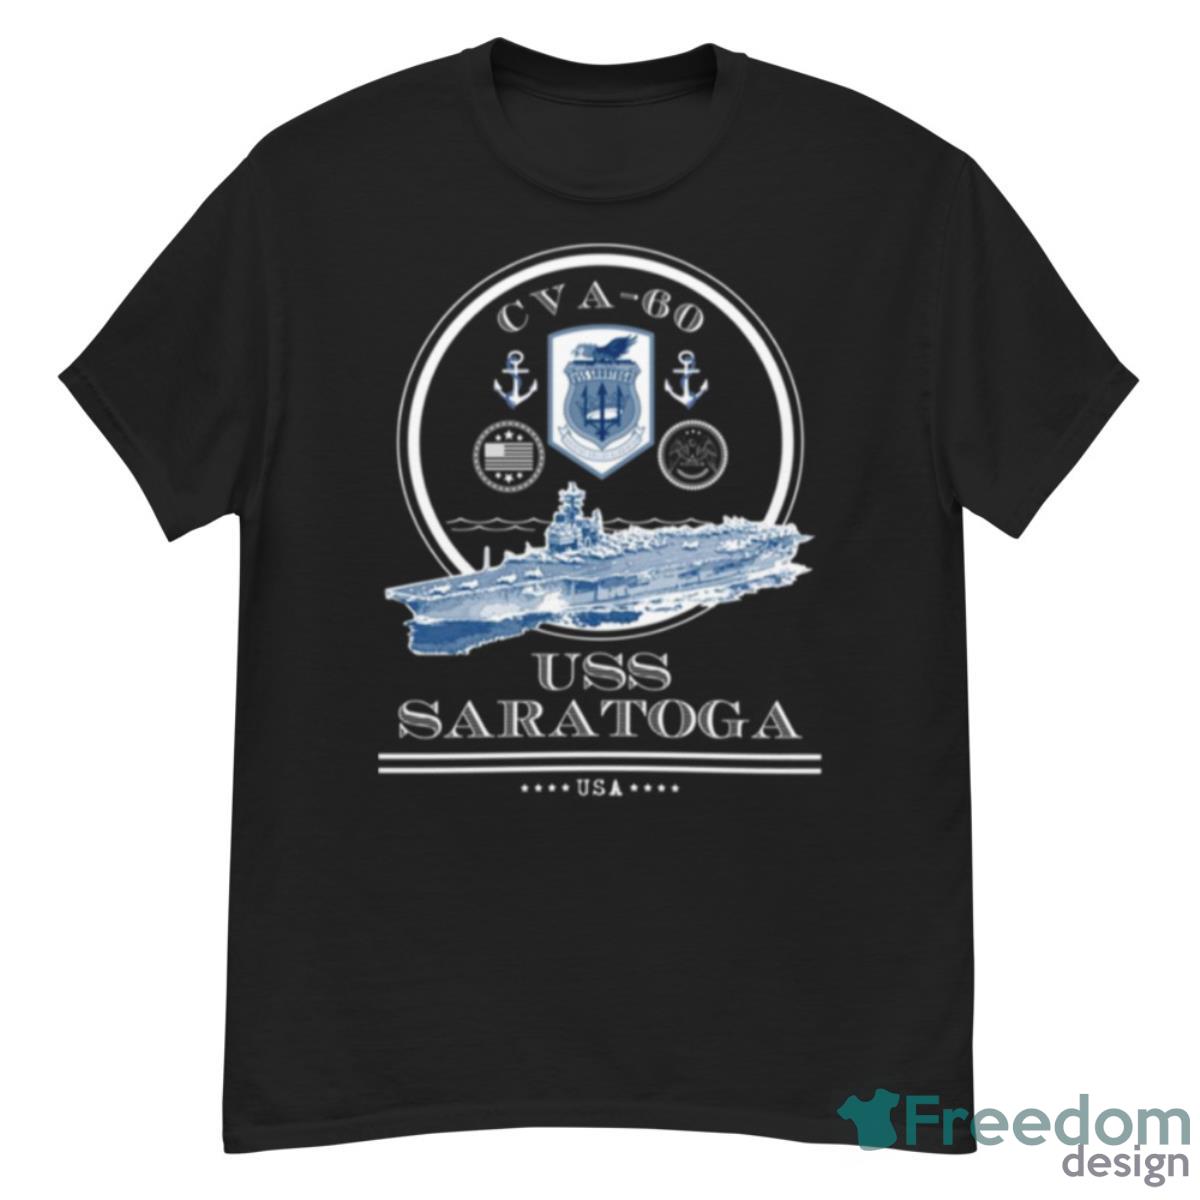 Uss Saratoga Cva 60 Naval Ship Military Aircraft Carrier shirt - G500 Men’s Classic T-Shirt